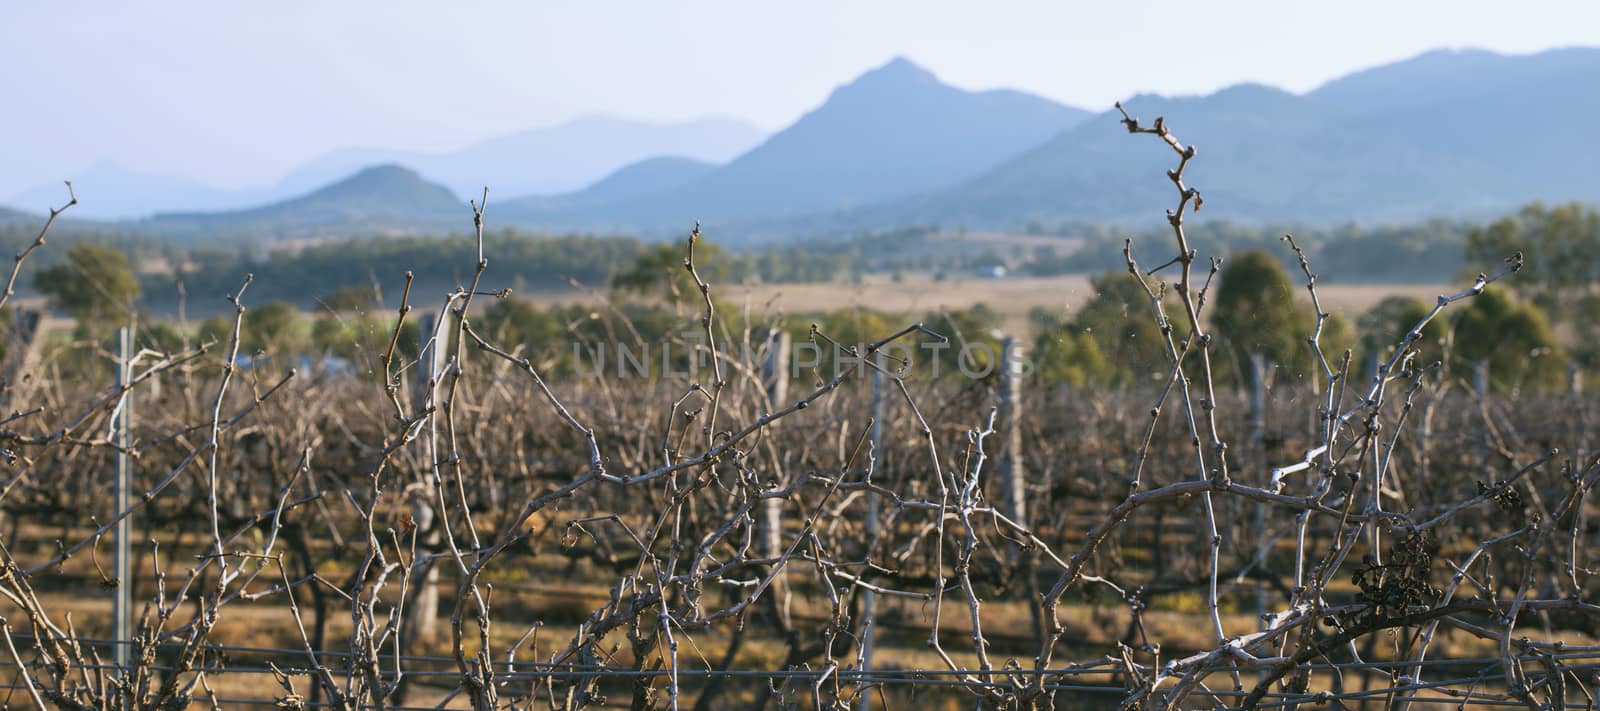 Vineyard in Mount Alford, Queensland by artistrobd